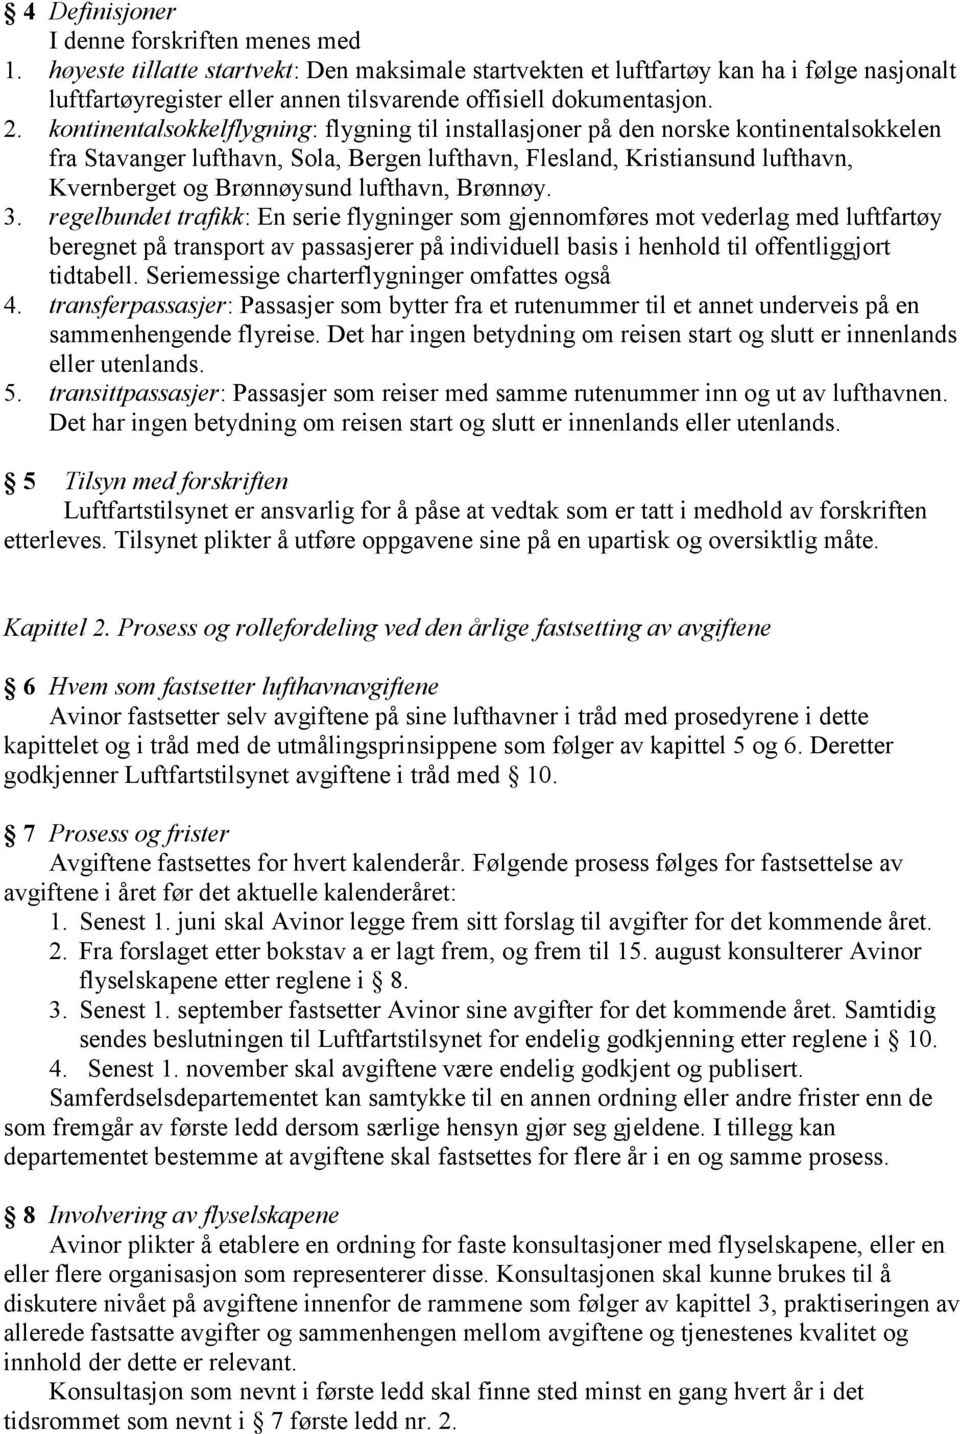 kontinentalsokkelflygning: flygning til installasjoner på den norske kontinentalsokkelen fra Stavanger lufthavn, Sola, Bergen lufthavn, Flesland, Kristiansund lufthavn, Kvernberget og Brønnøysund